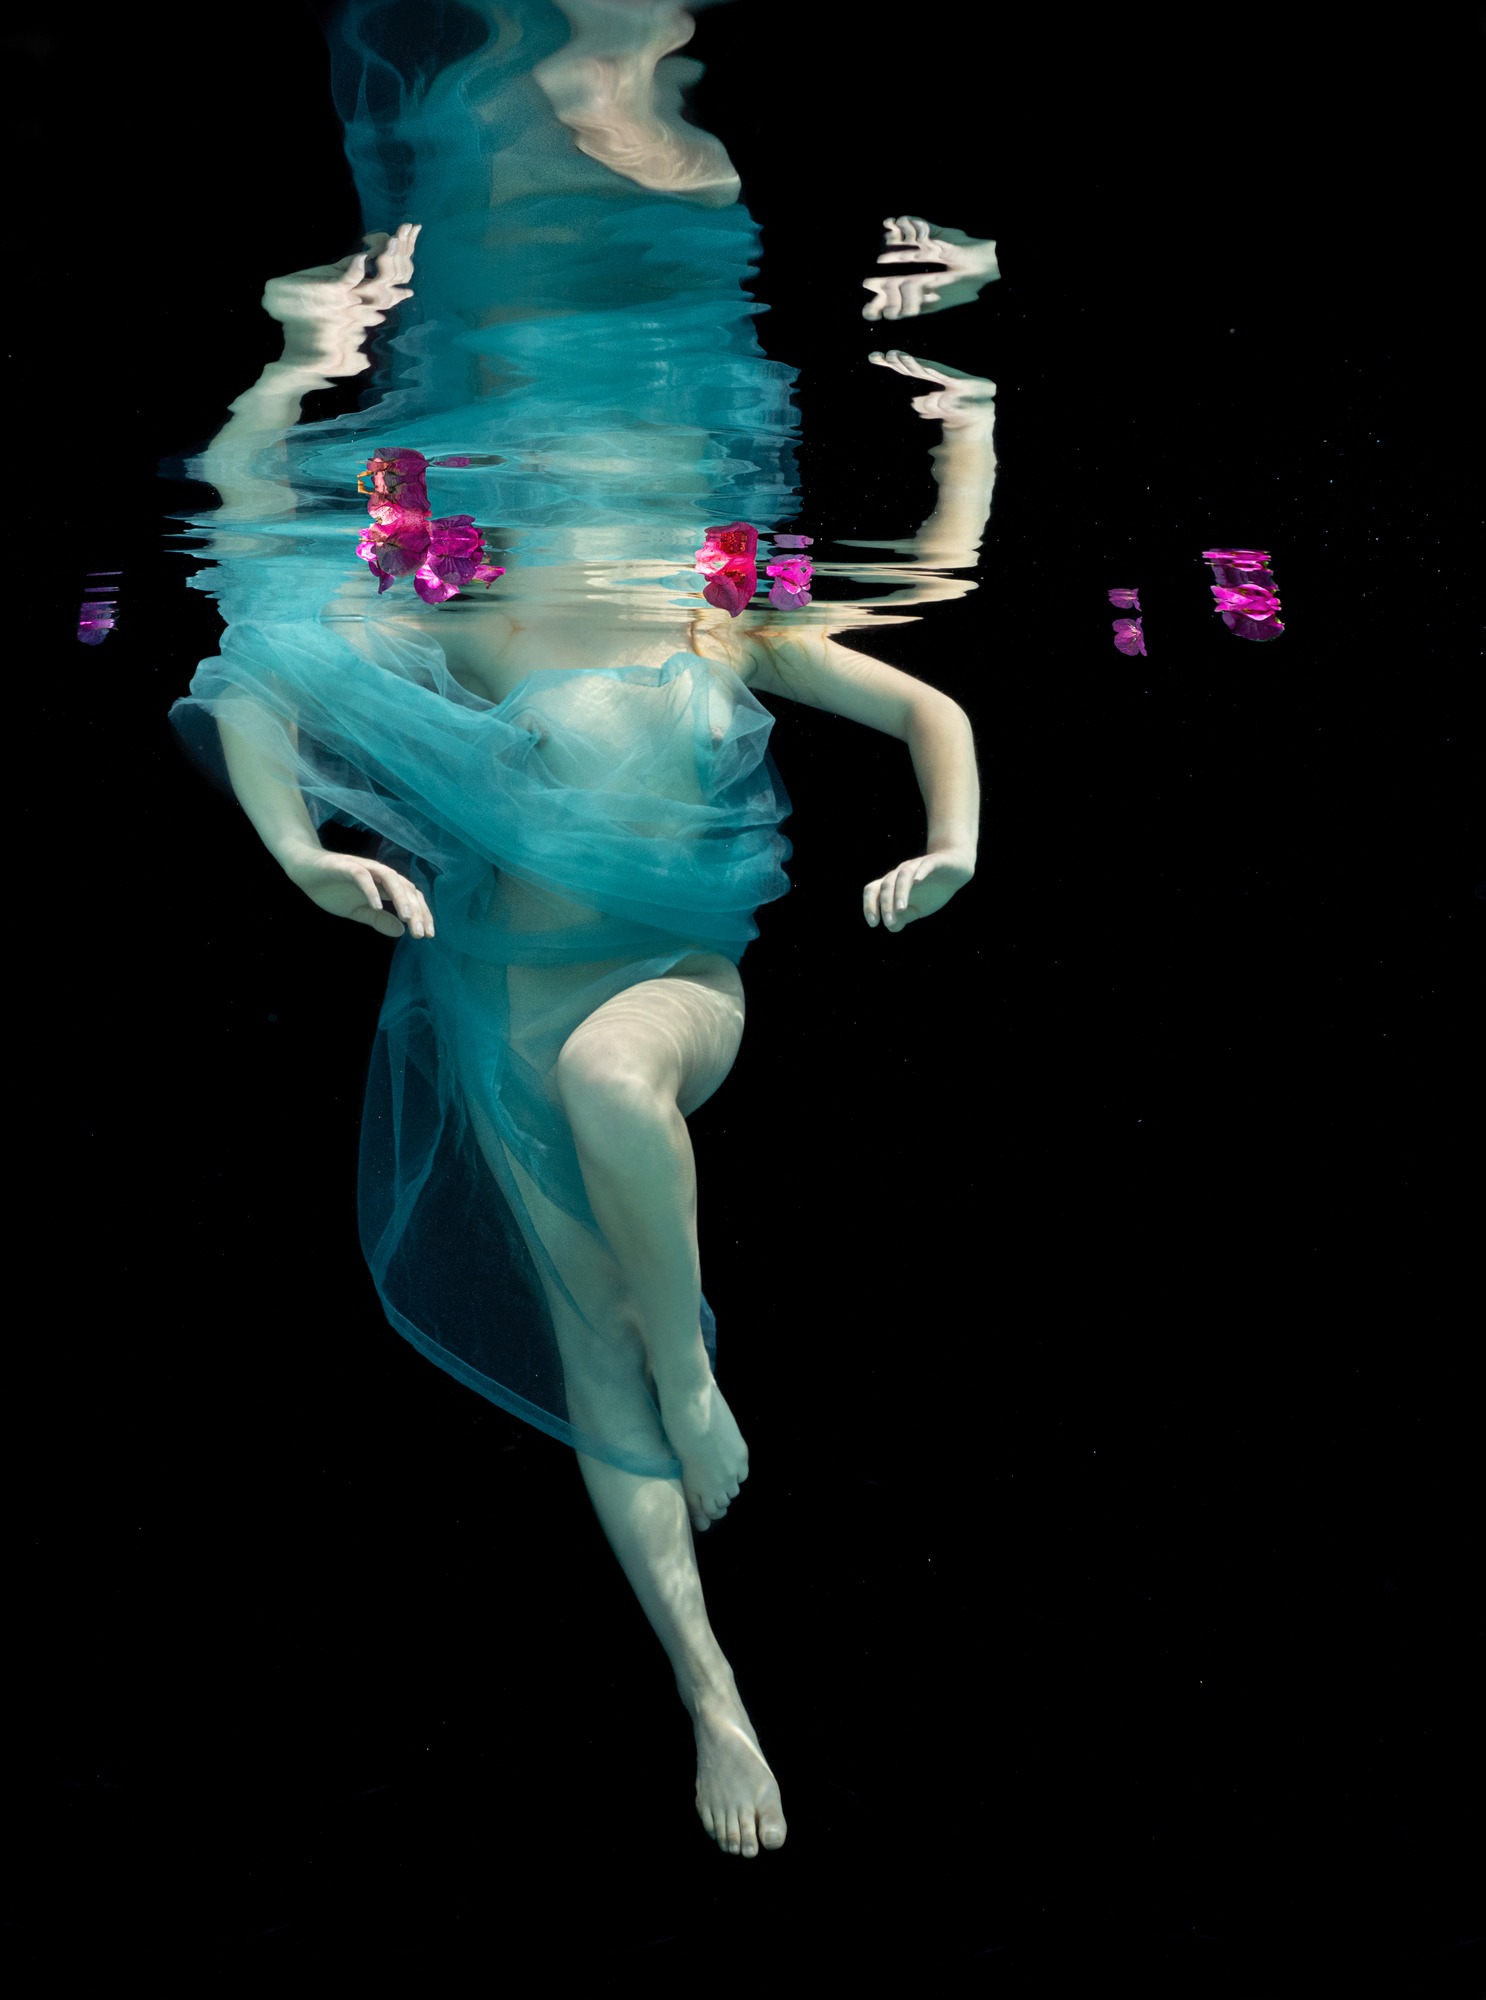 Dancing Flowers - underwater photograph - print on aluminum 48x36